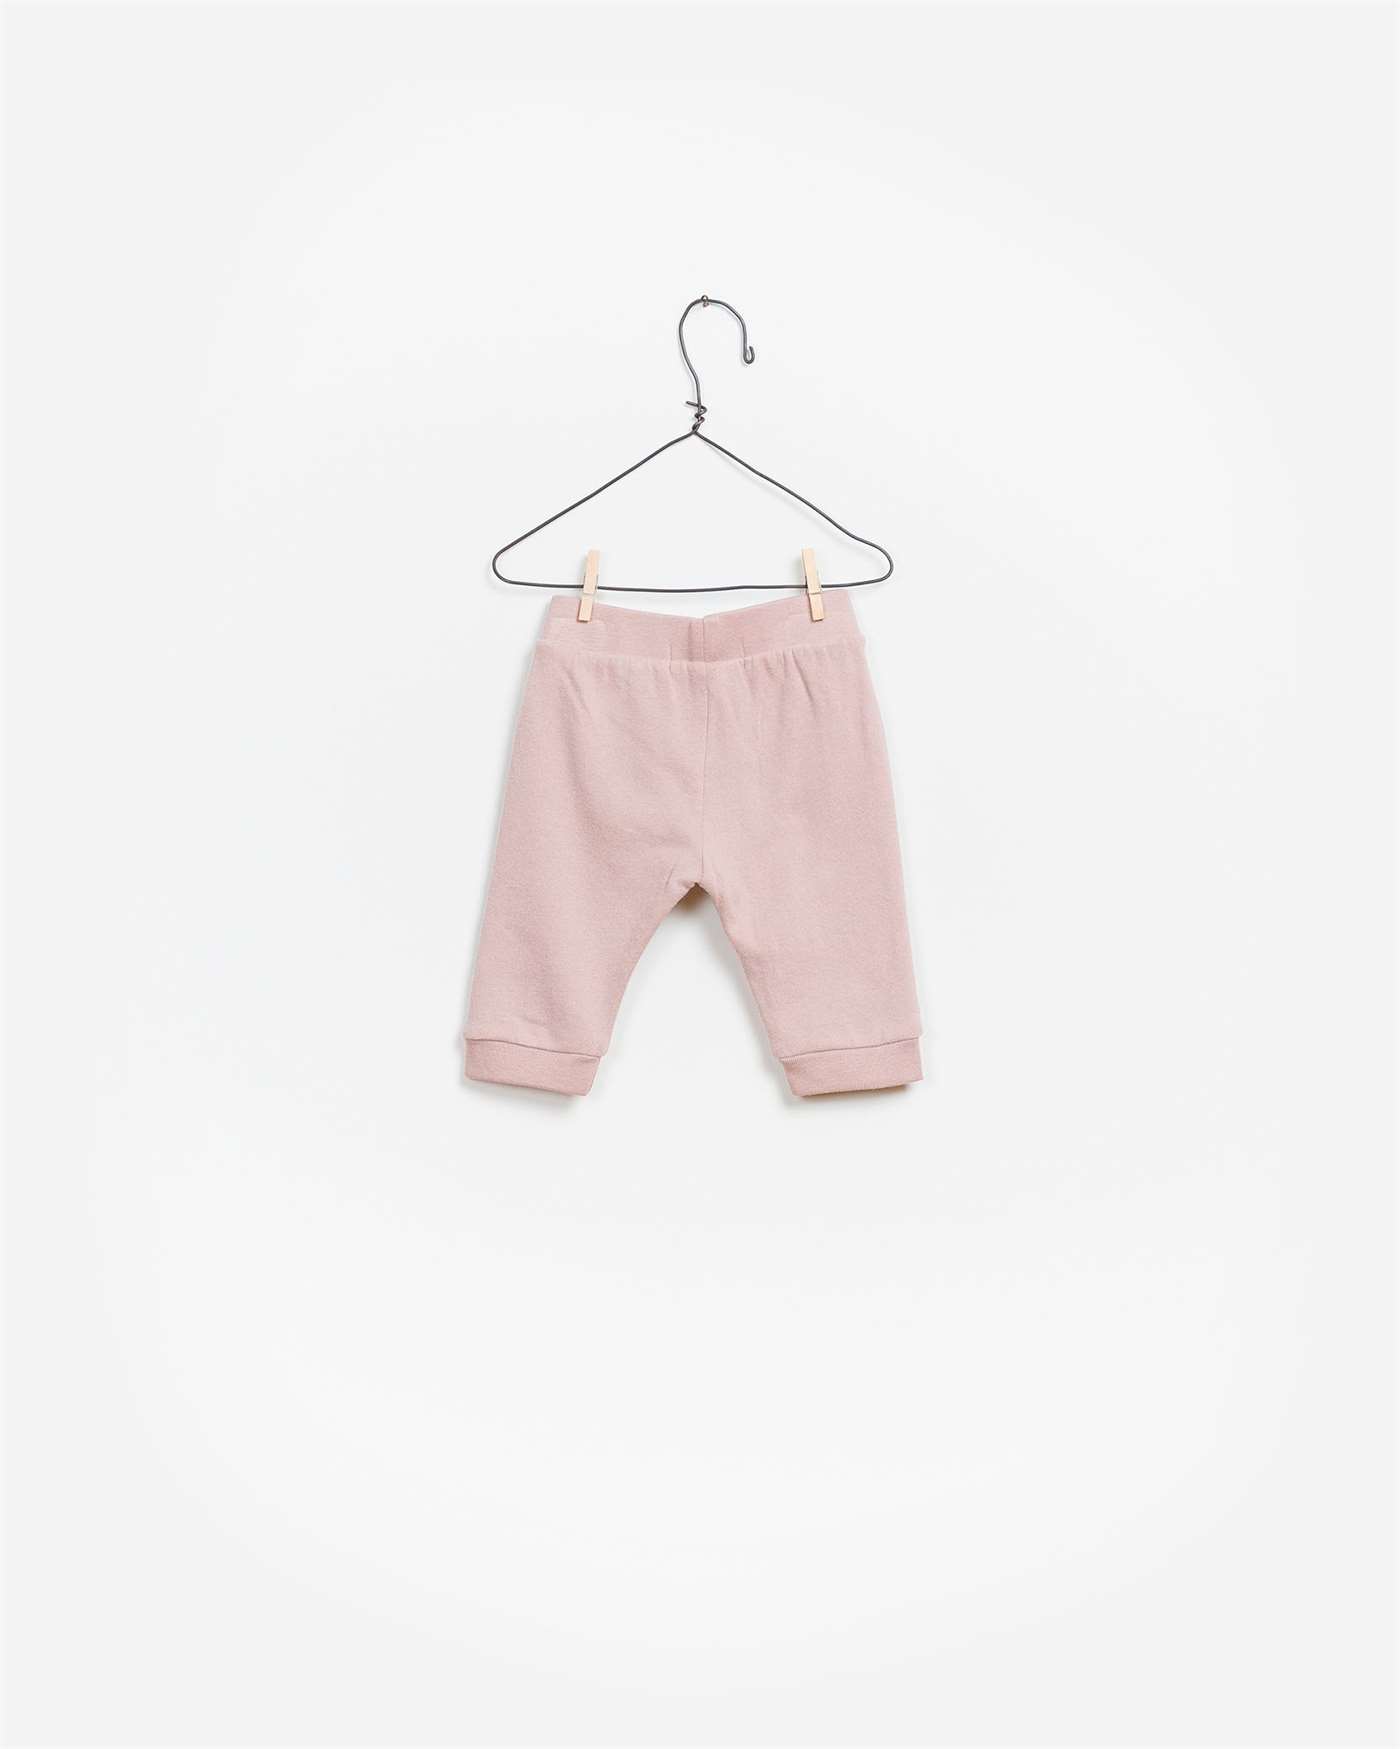 BeeBoo|BeeBoo PlayUp vêtements bébé baby cloth Pantalon pants Felpa coton bio organic cotton rose pink 1